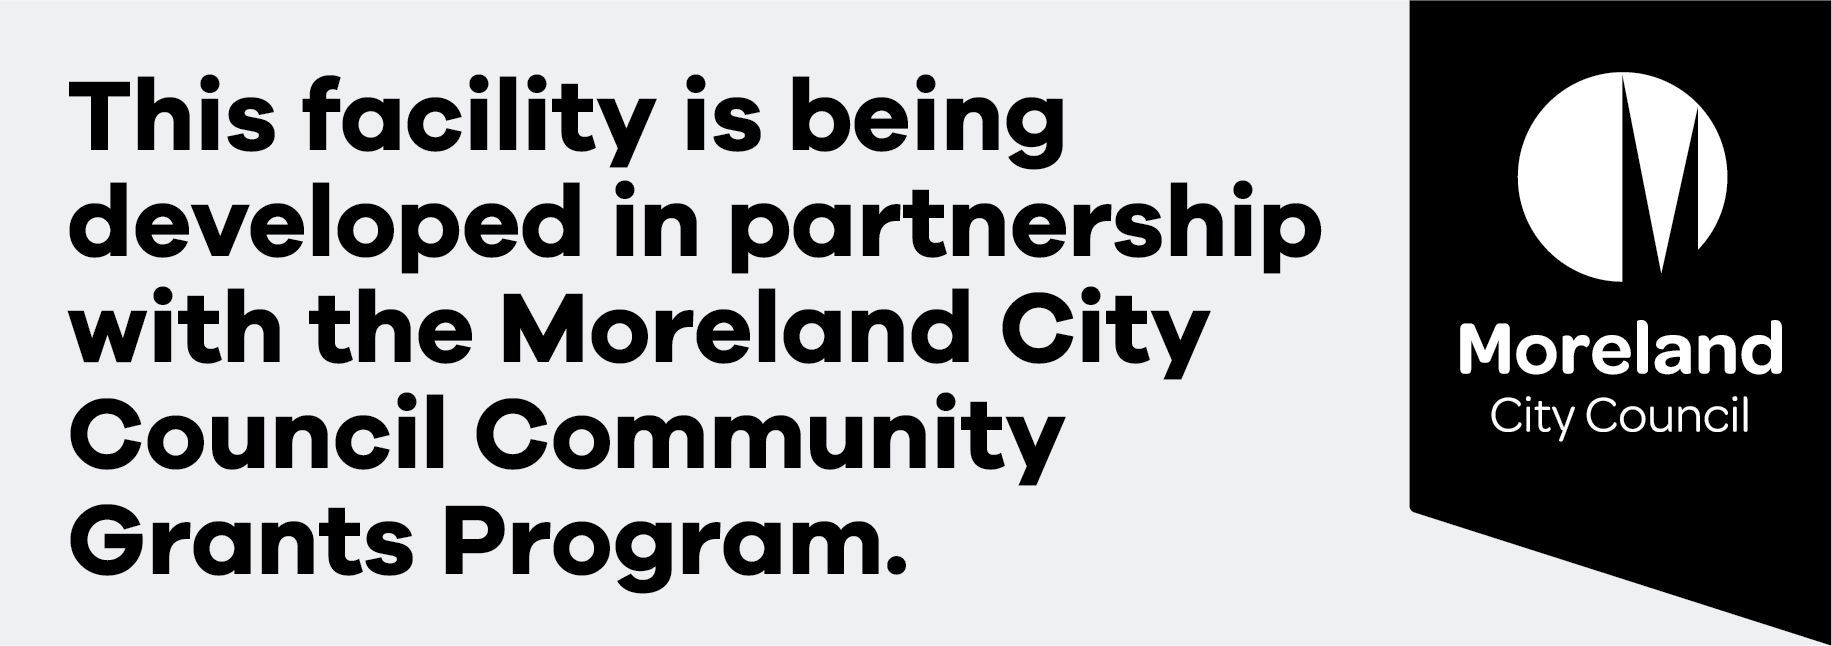 Moreland City Council Partnership Grants 